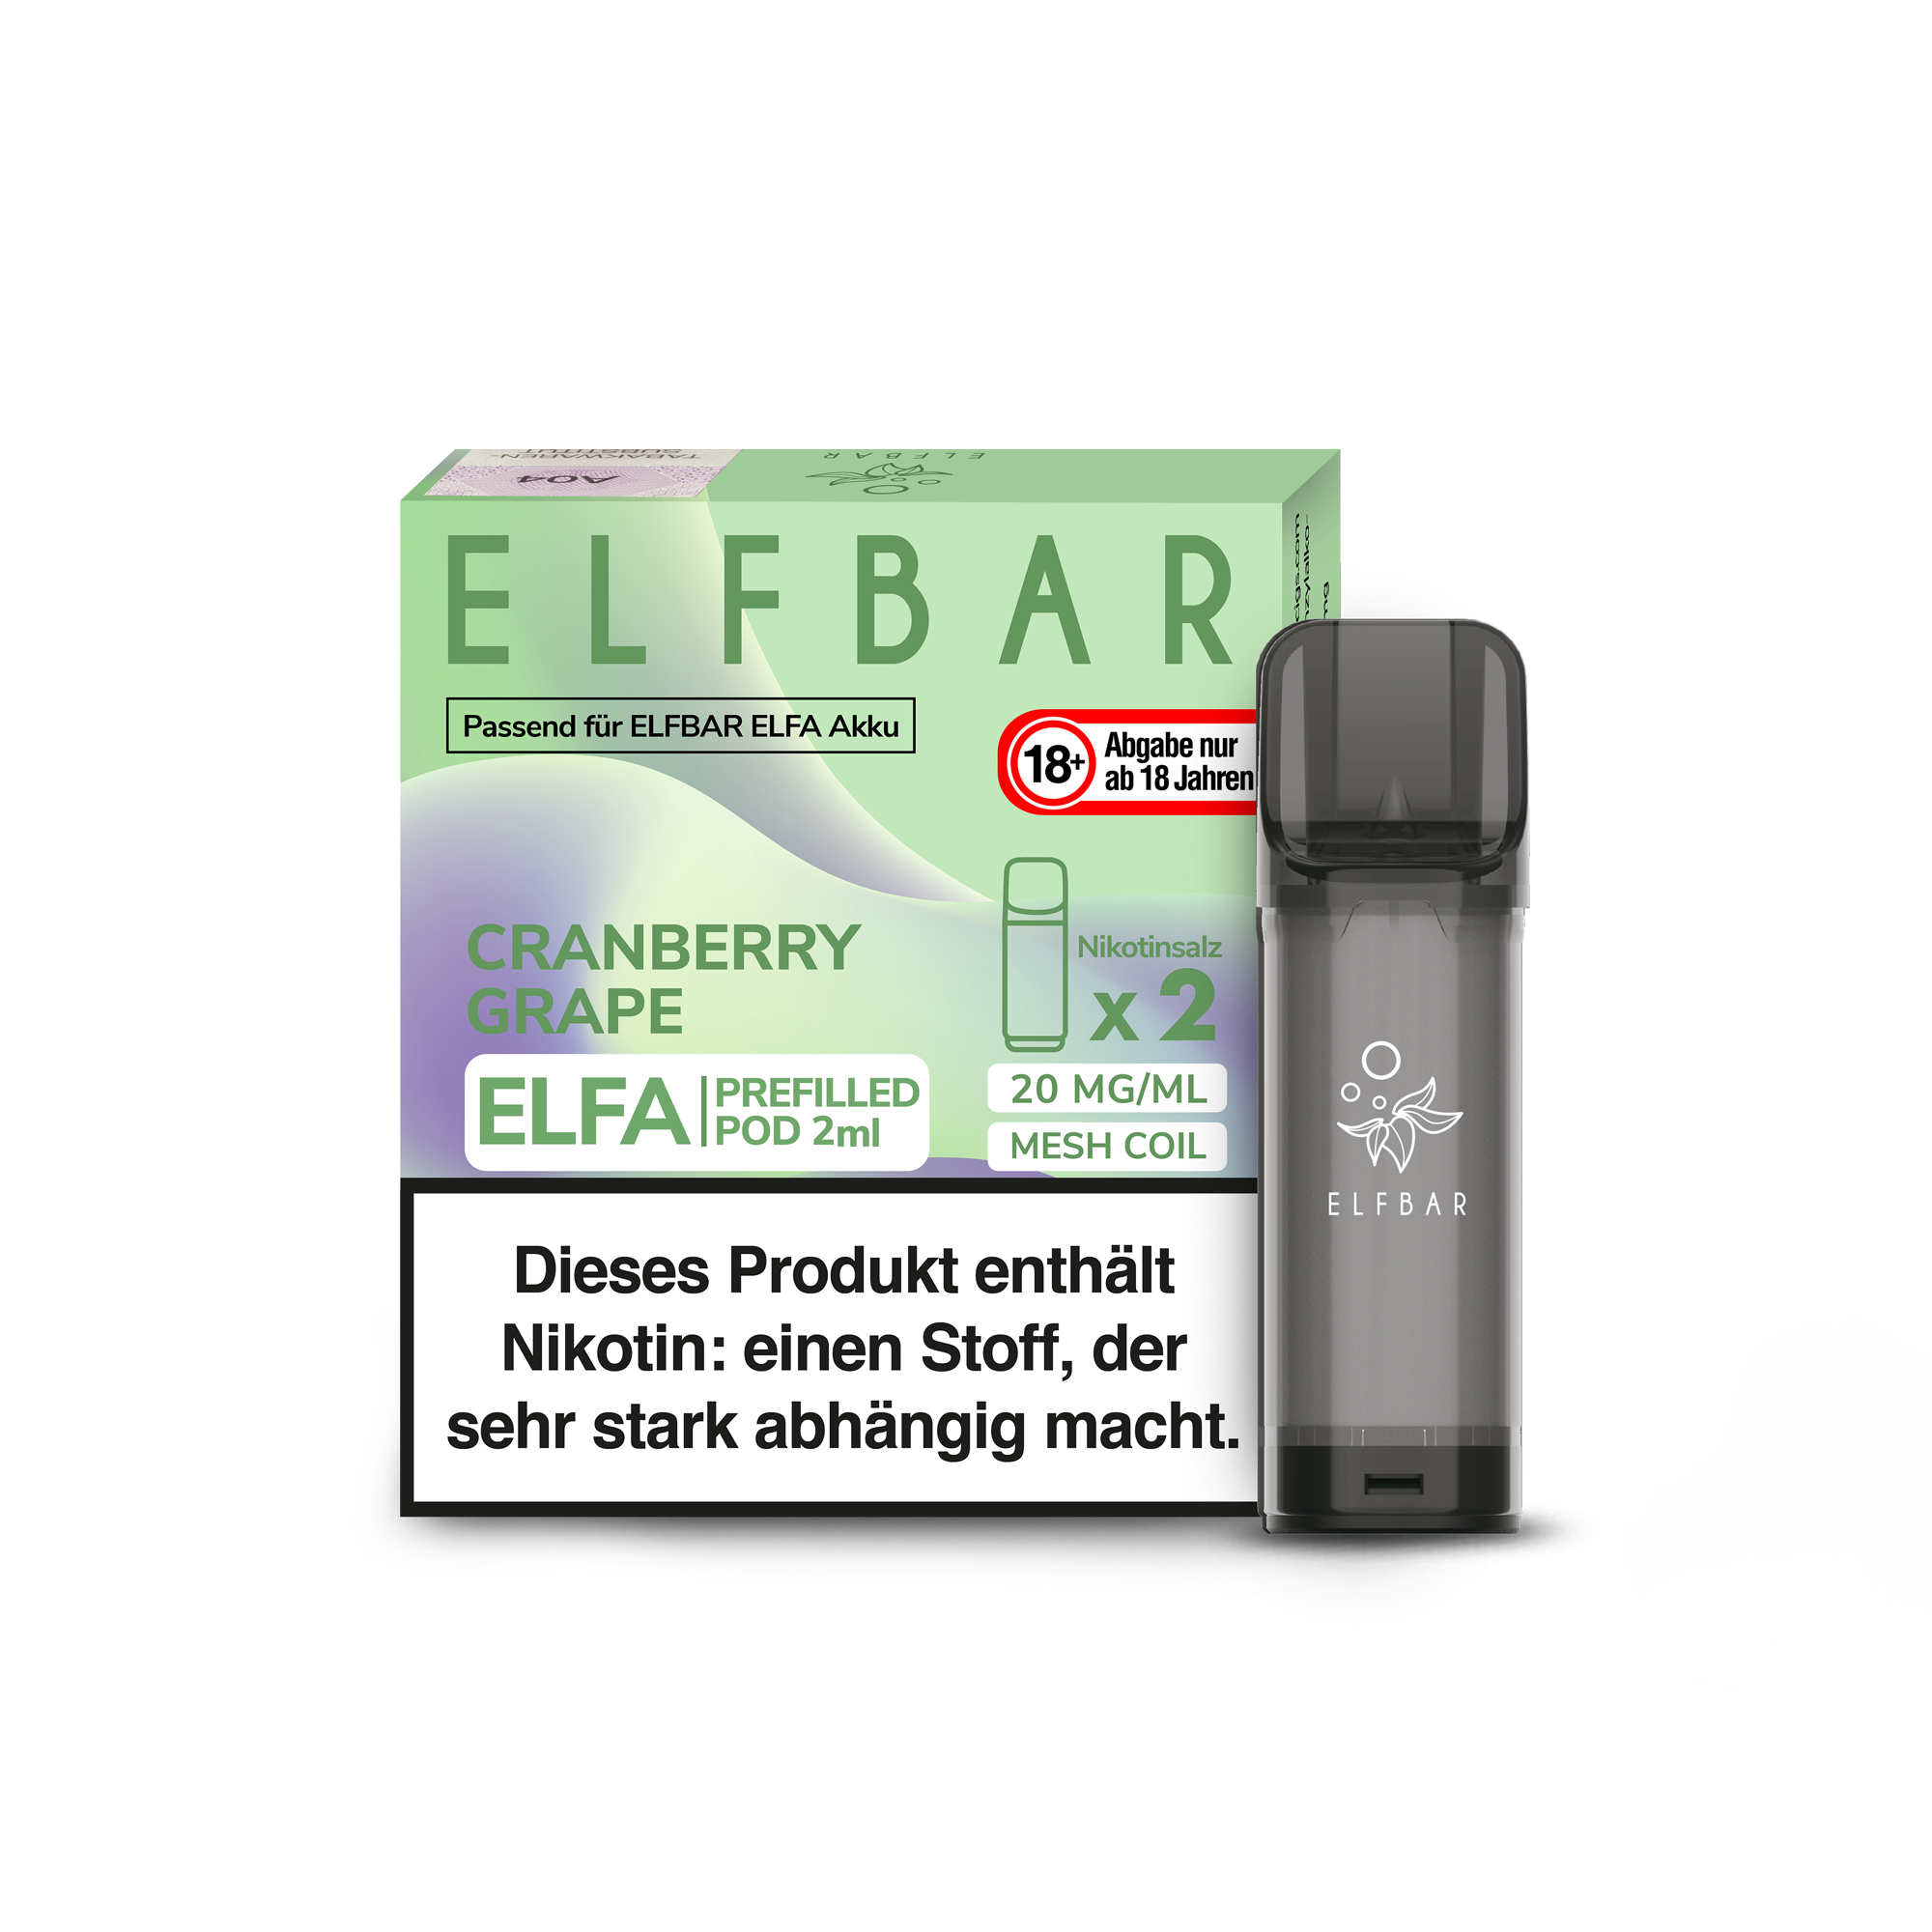 Elfbar ELFA pre-filled POD-System Cranberry & Grape 2x2ml kaufen